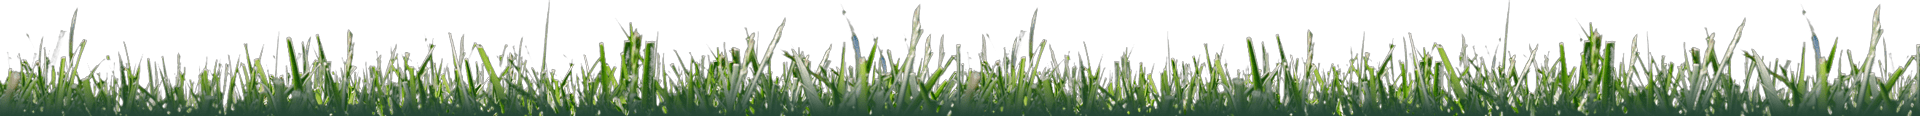 decorative image of grass